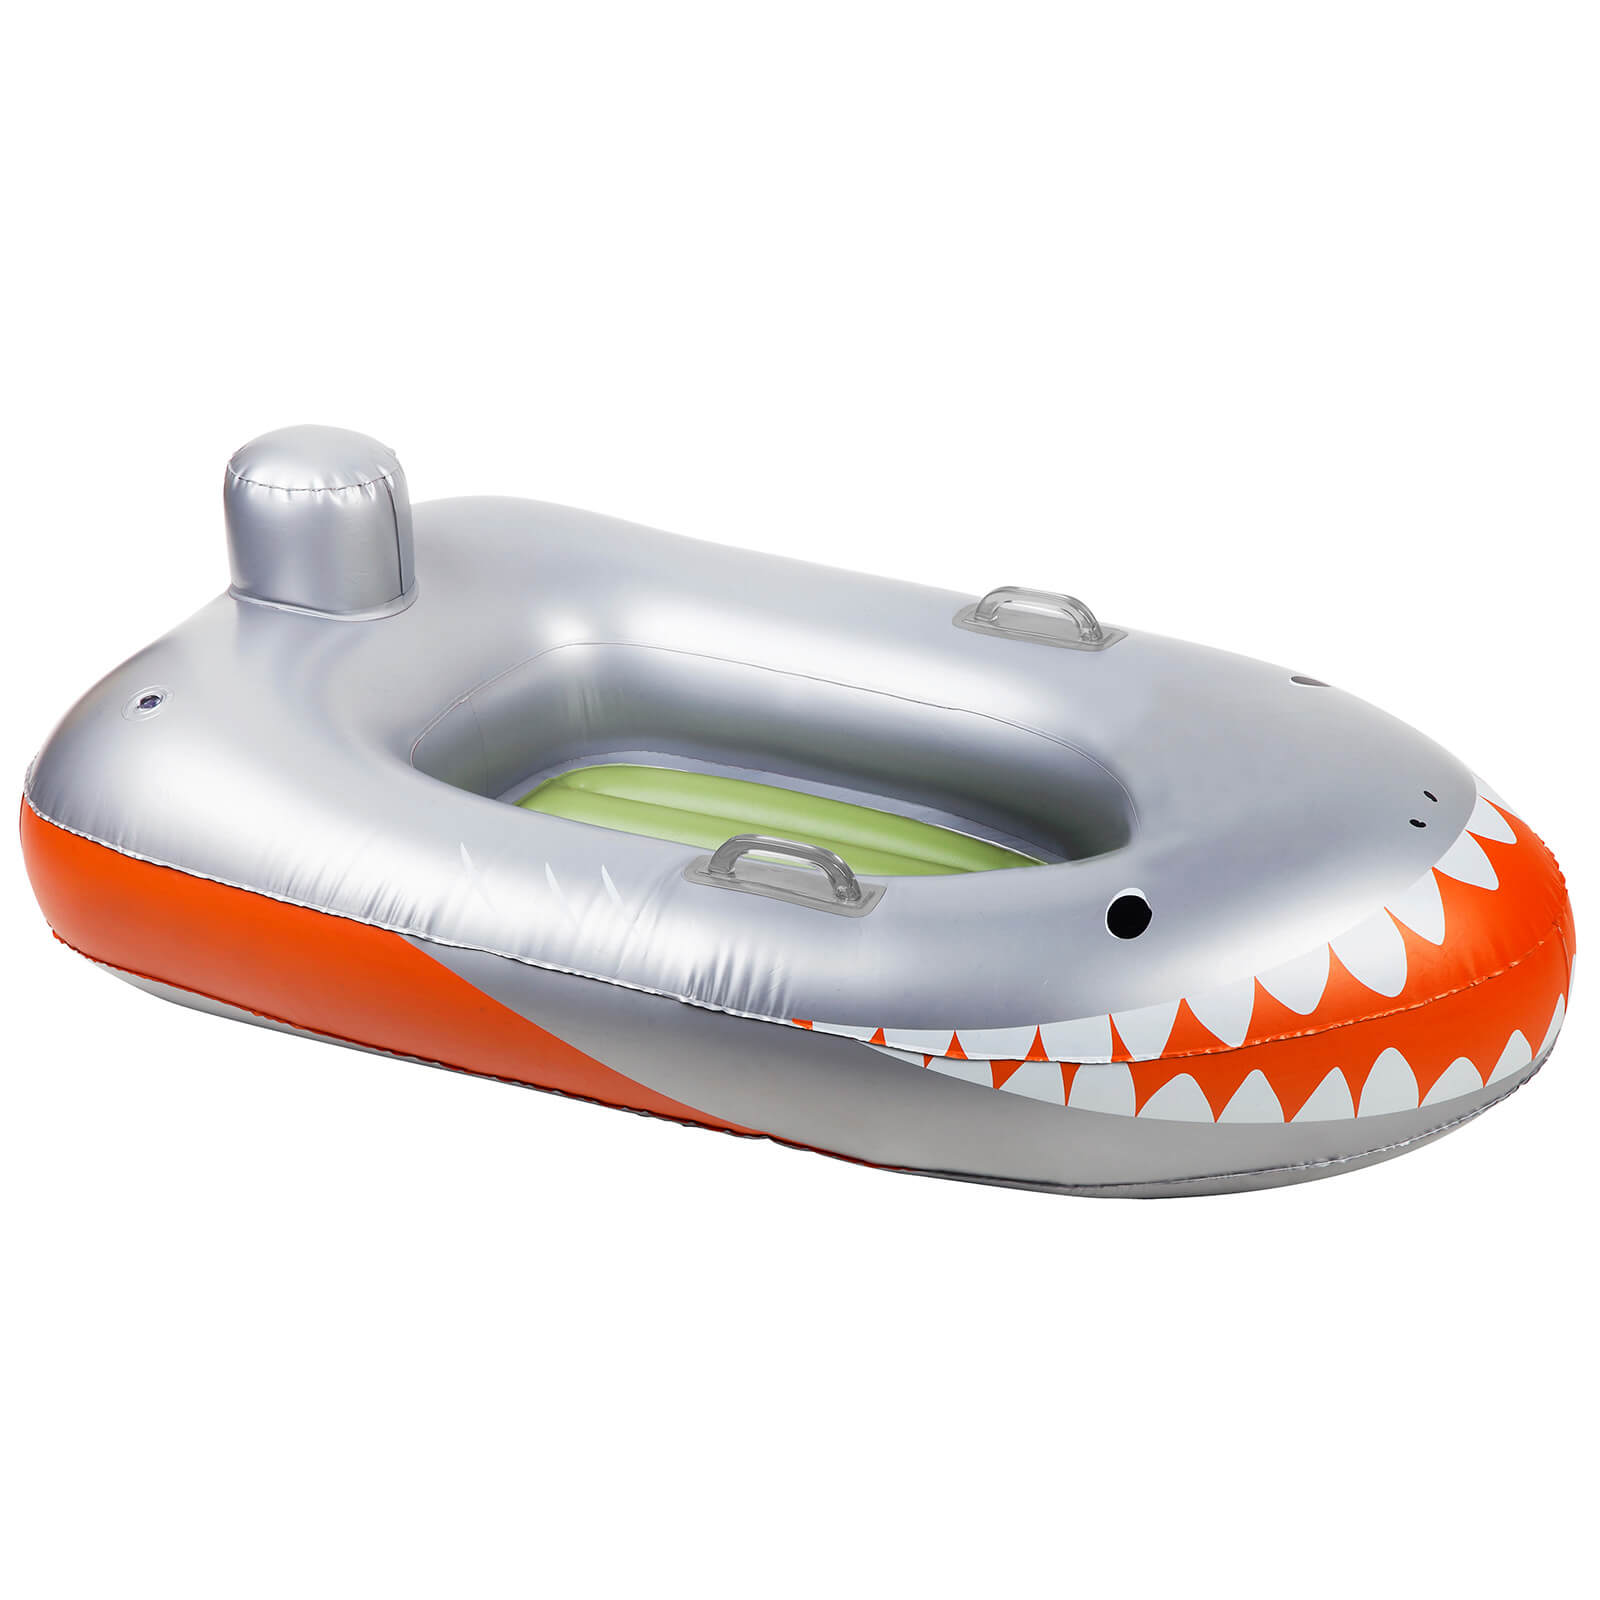 Sunnylife Speed Boat Inflatabale - Shark Attack